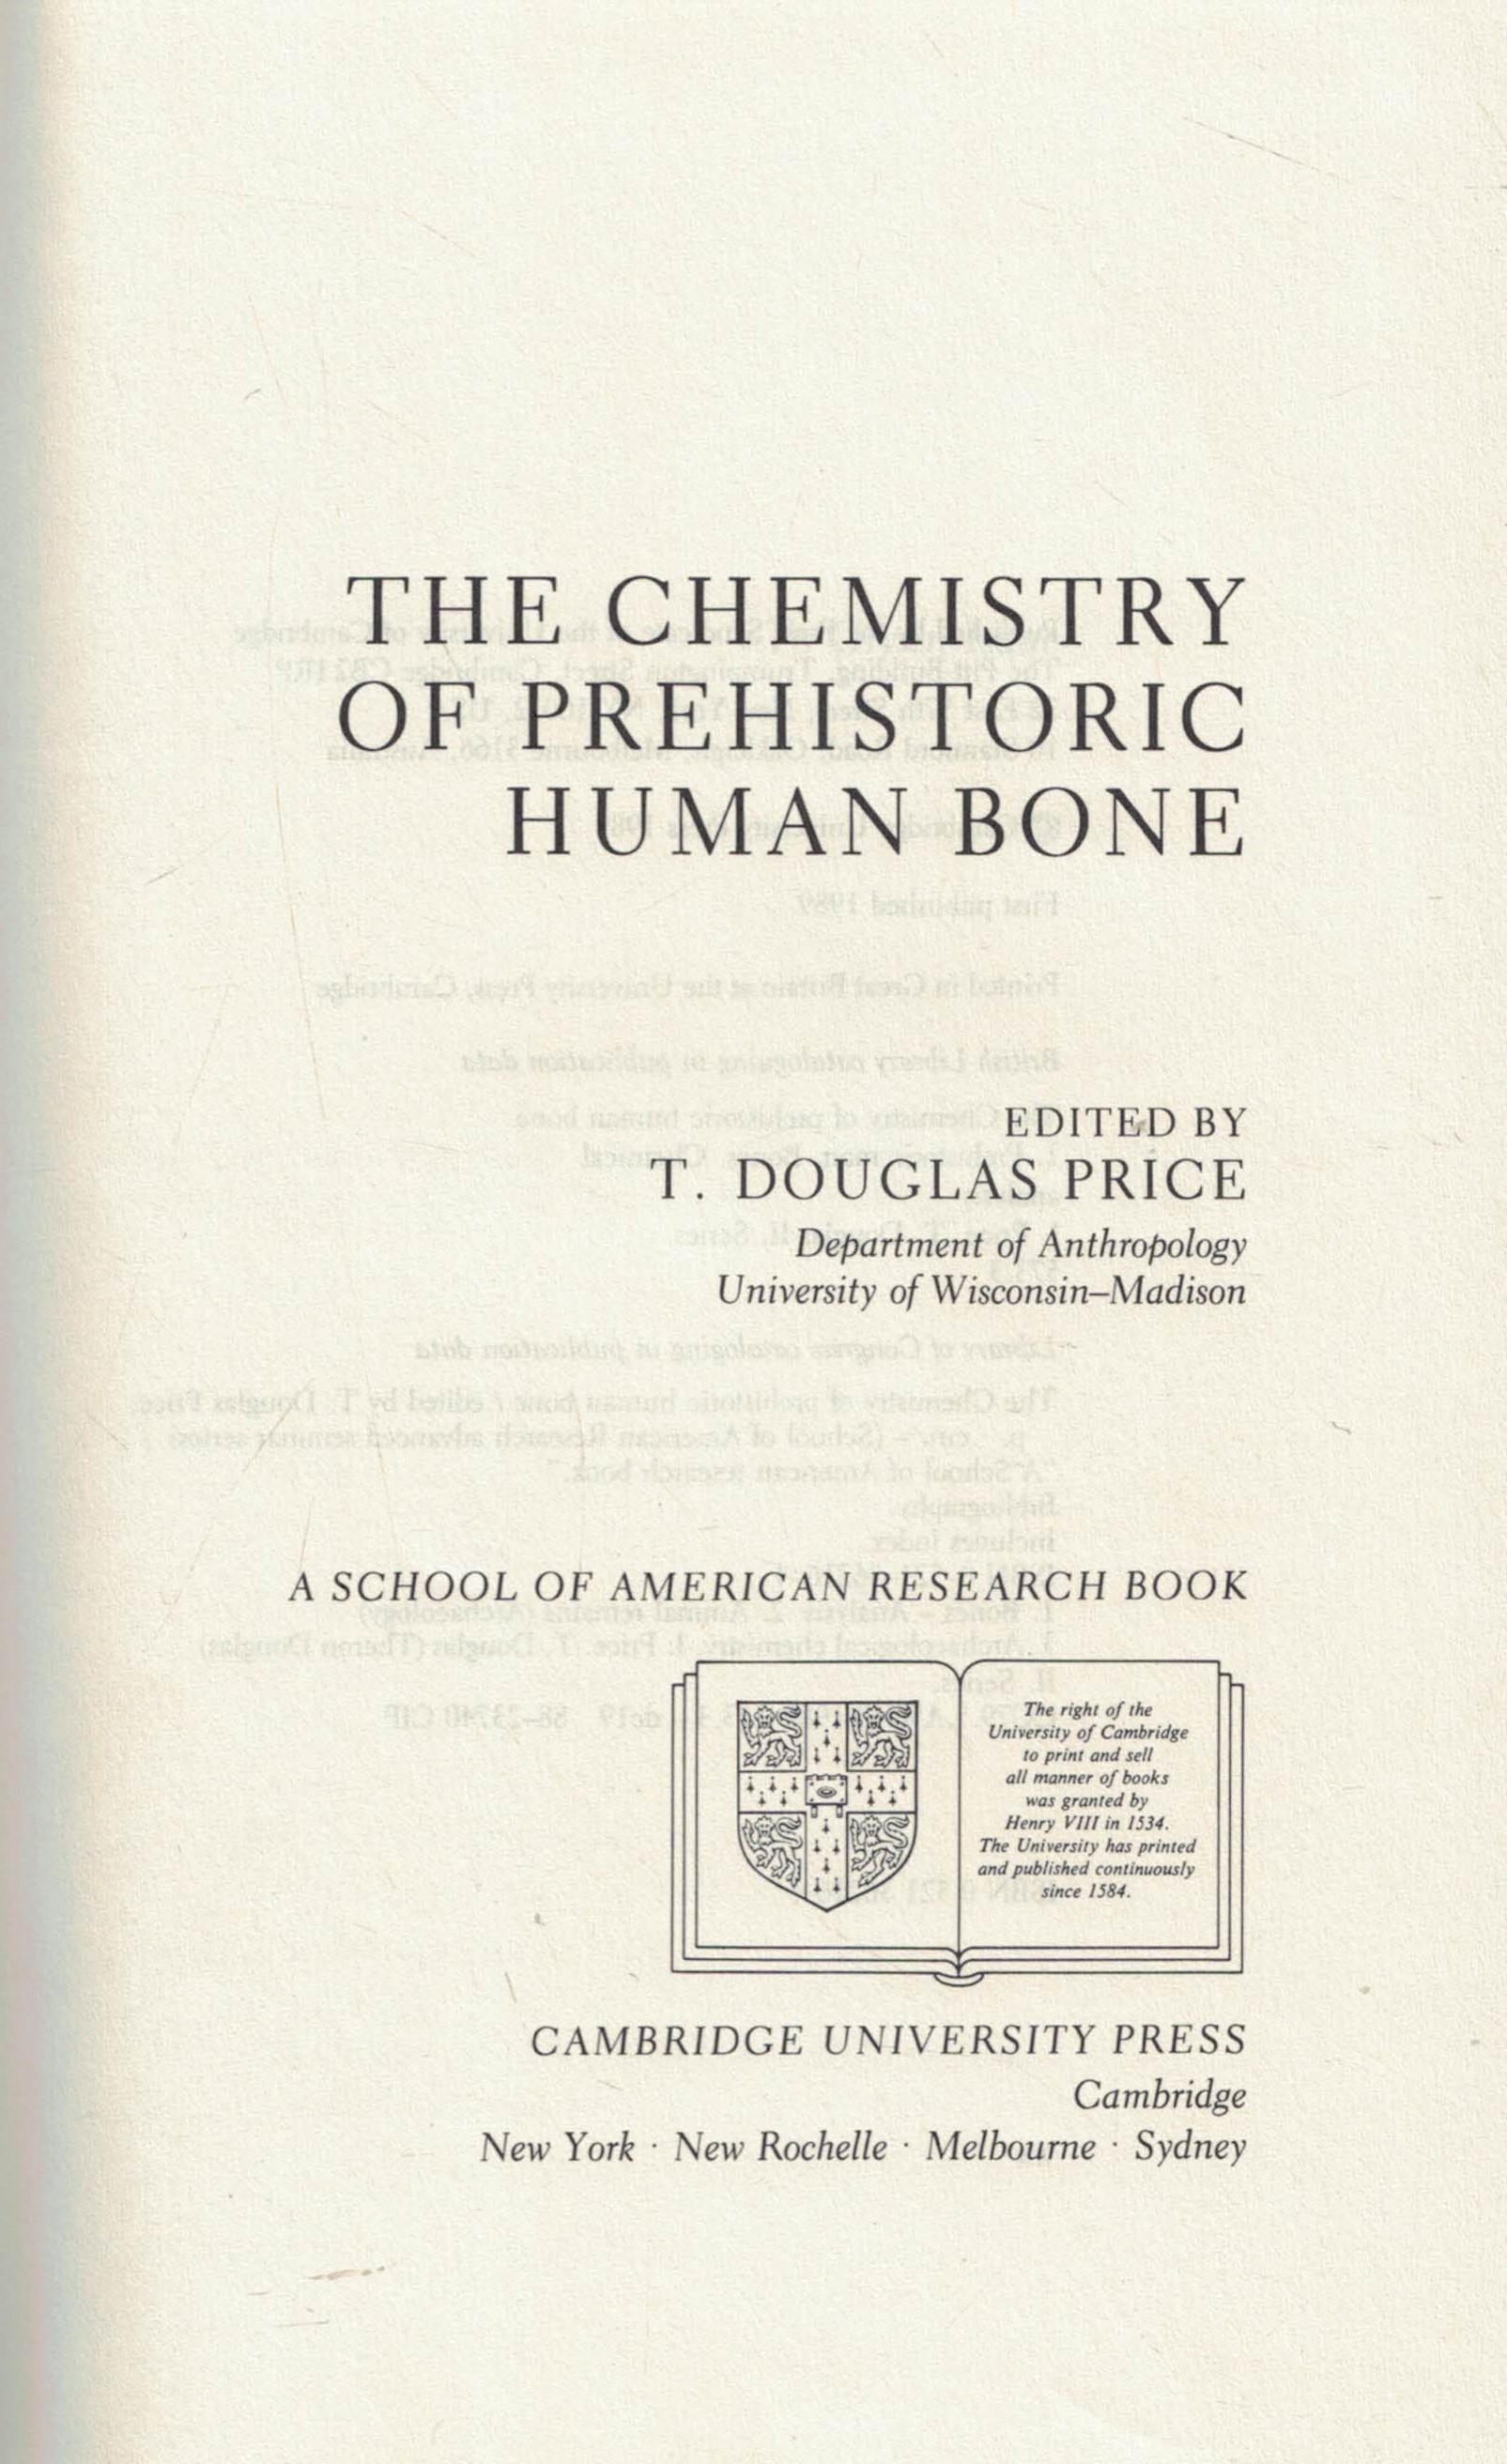 The Chemistry of Prehistoric Human Bone